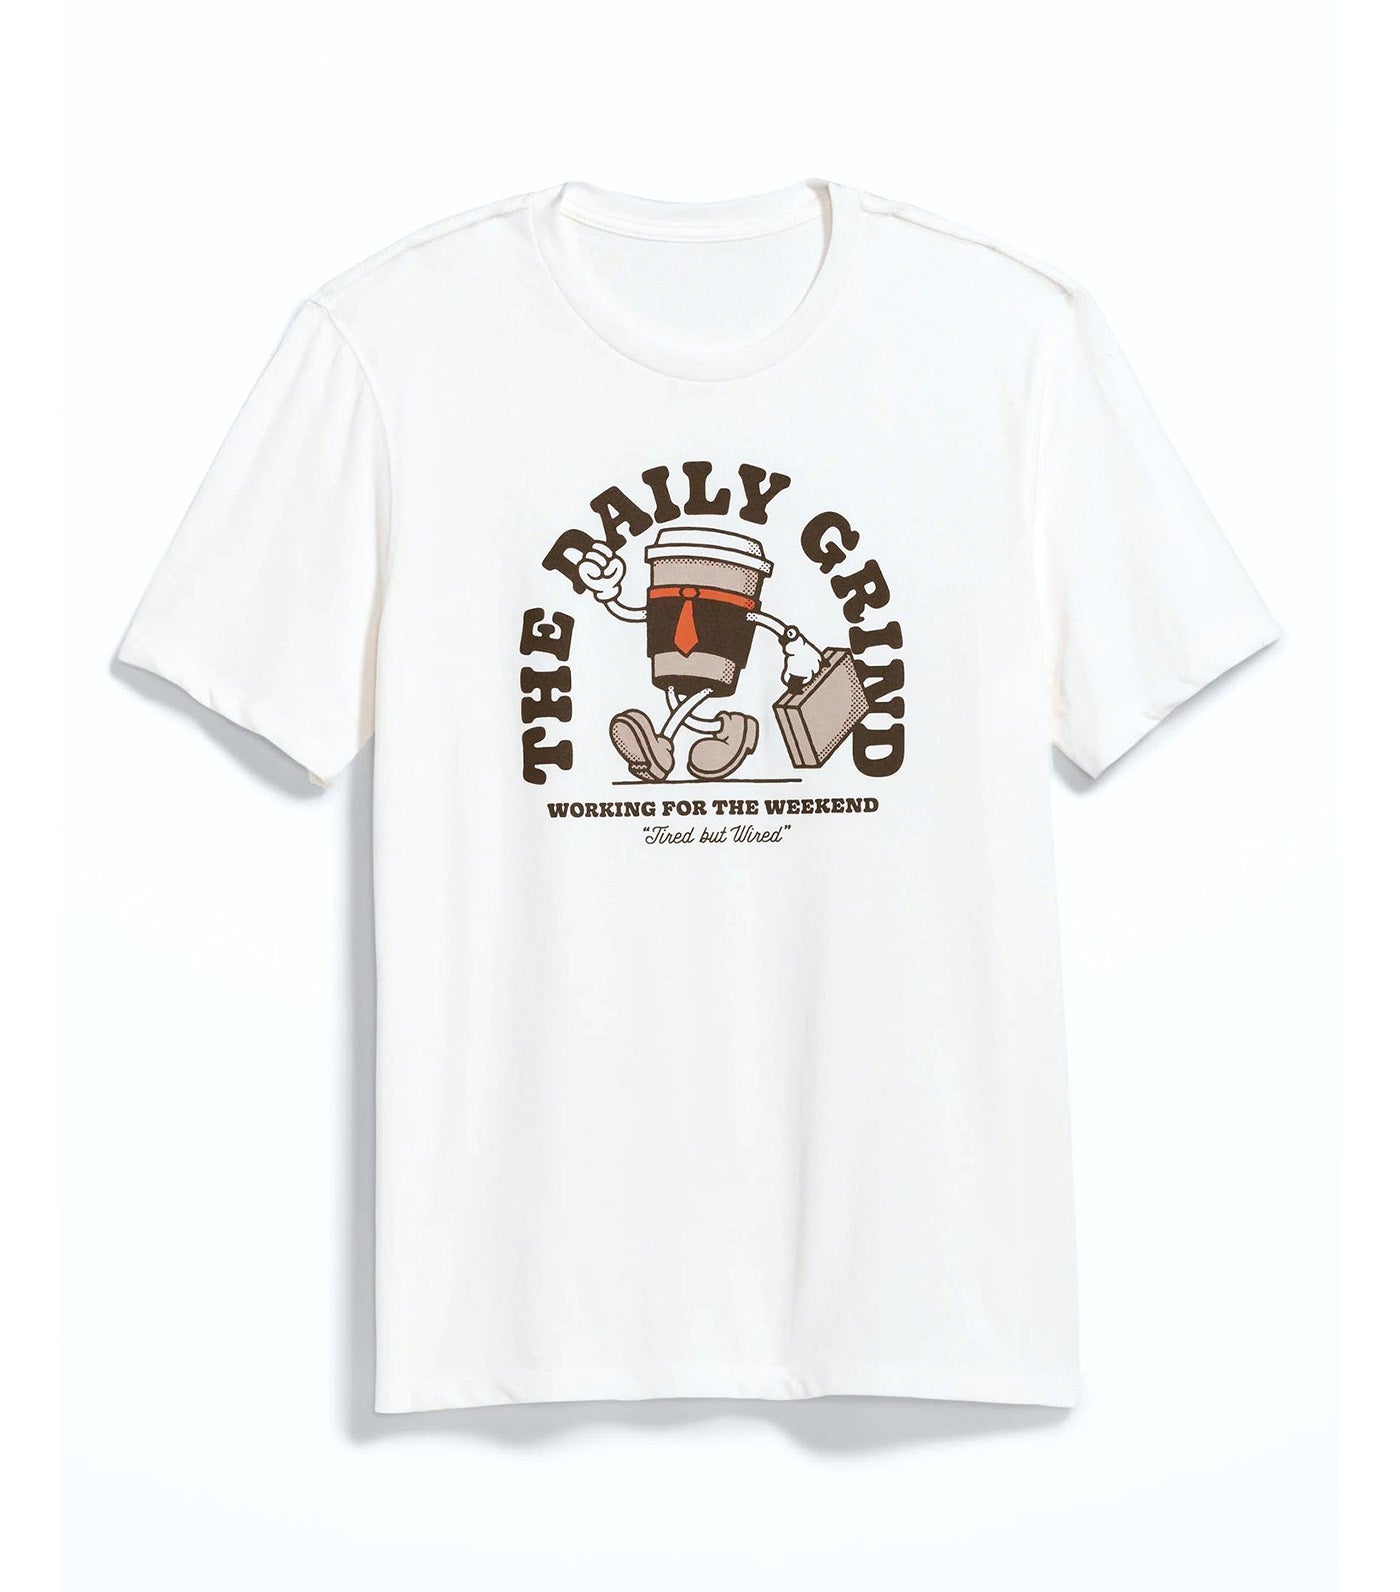 Soft-Washed Graphic T-Shirt for Men Salt Lake